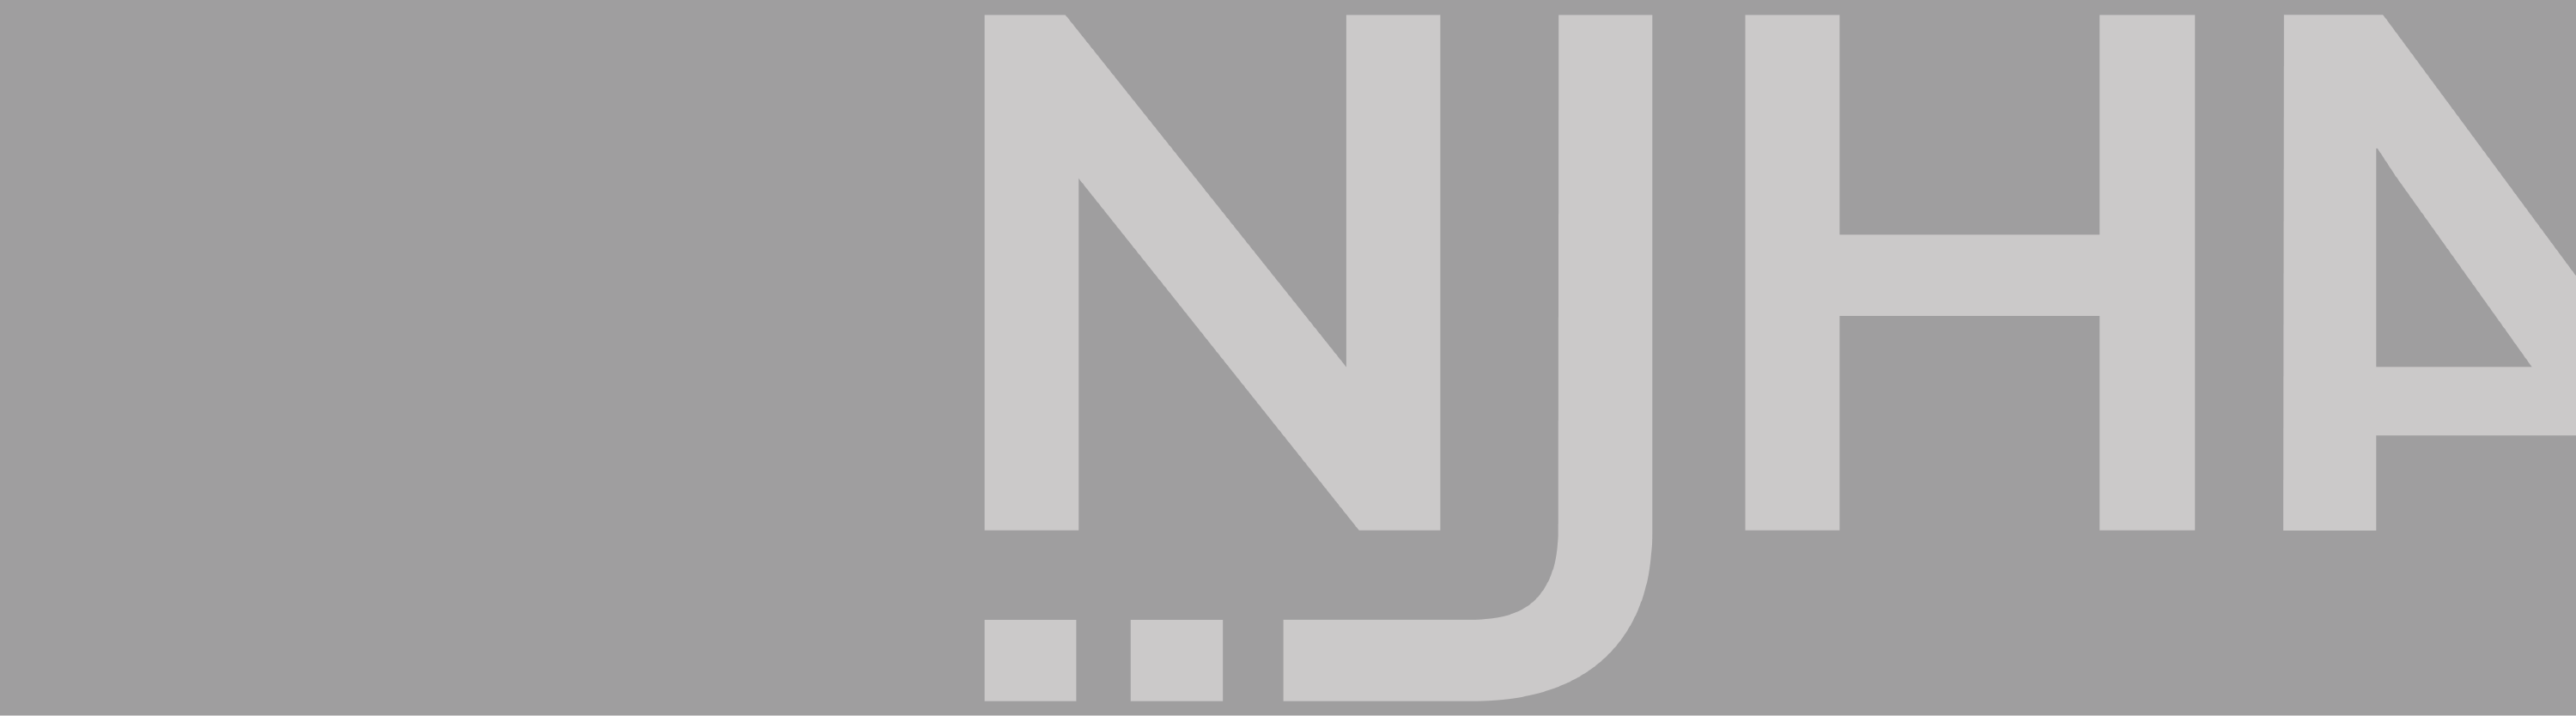 The NHHA logo on a gray background.